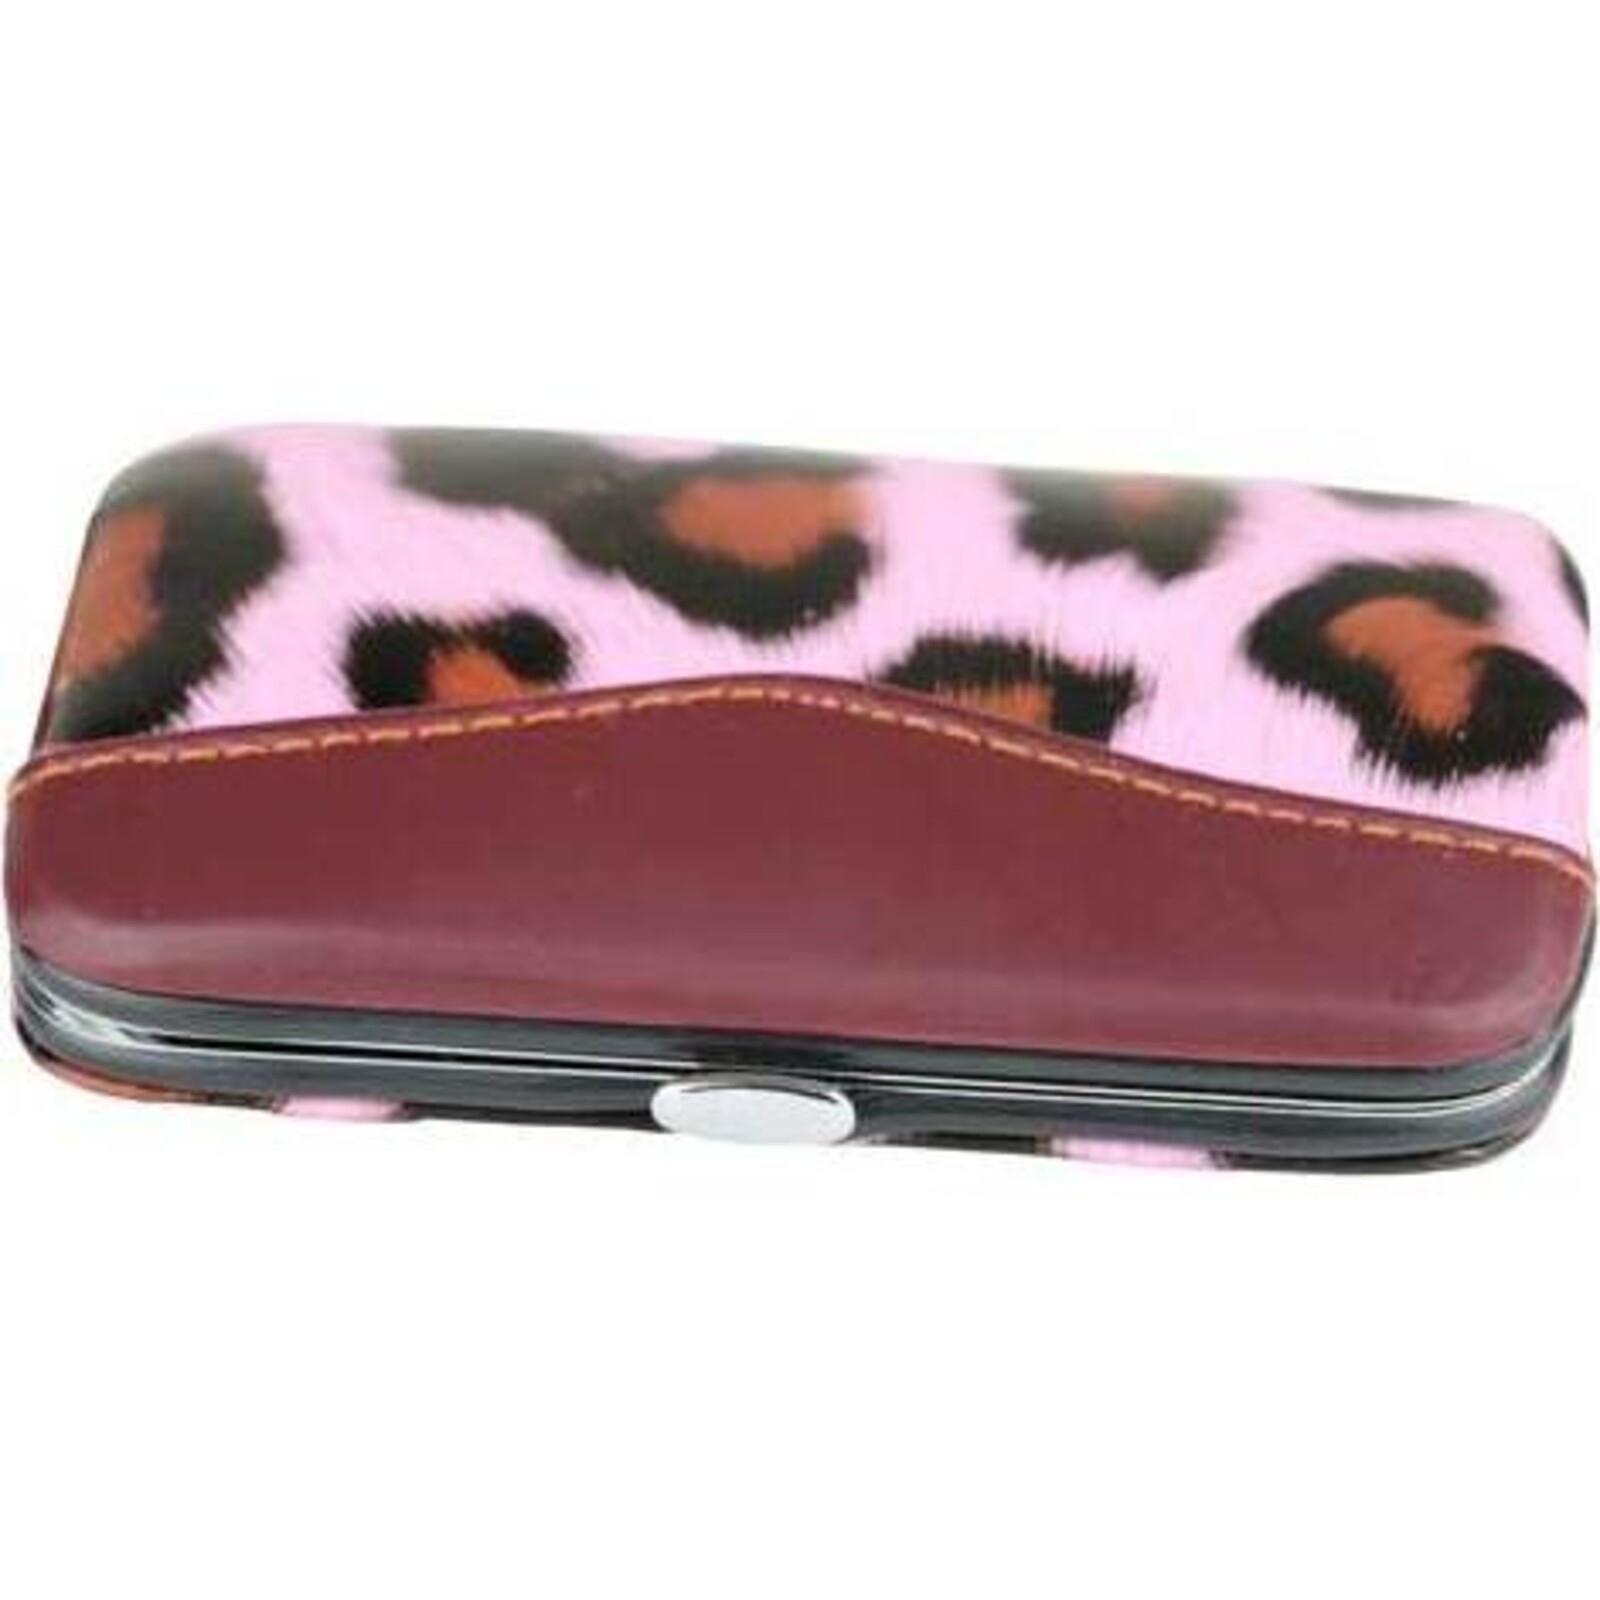 Manicure Set - Pink Leopard